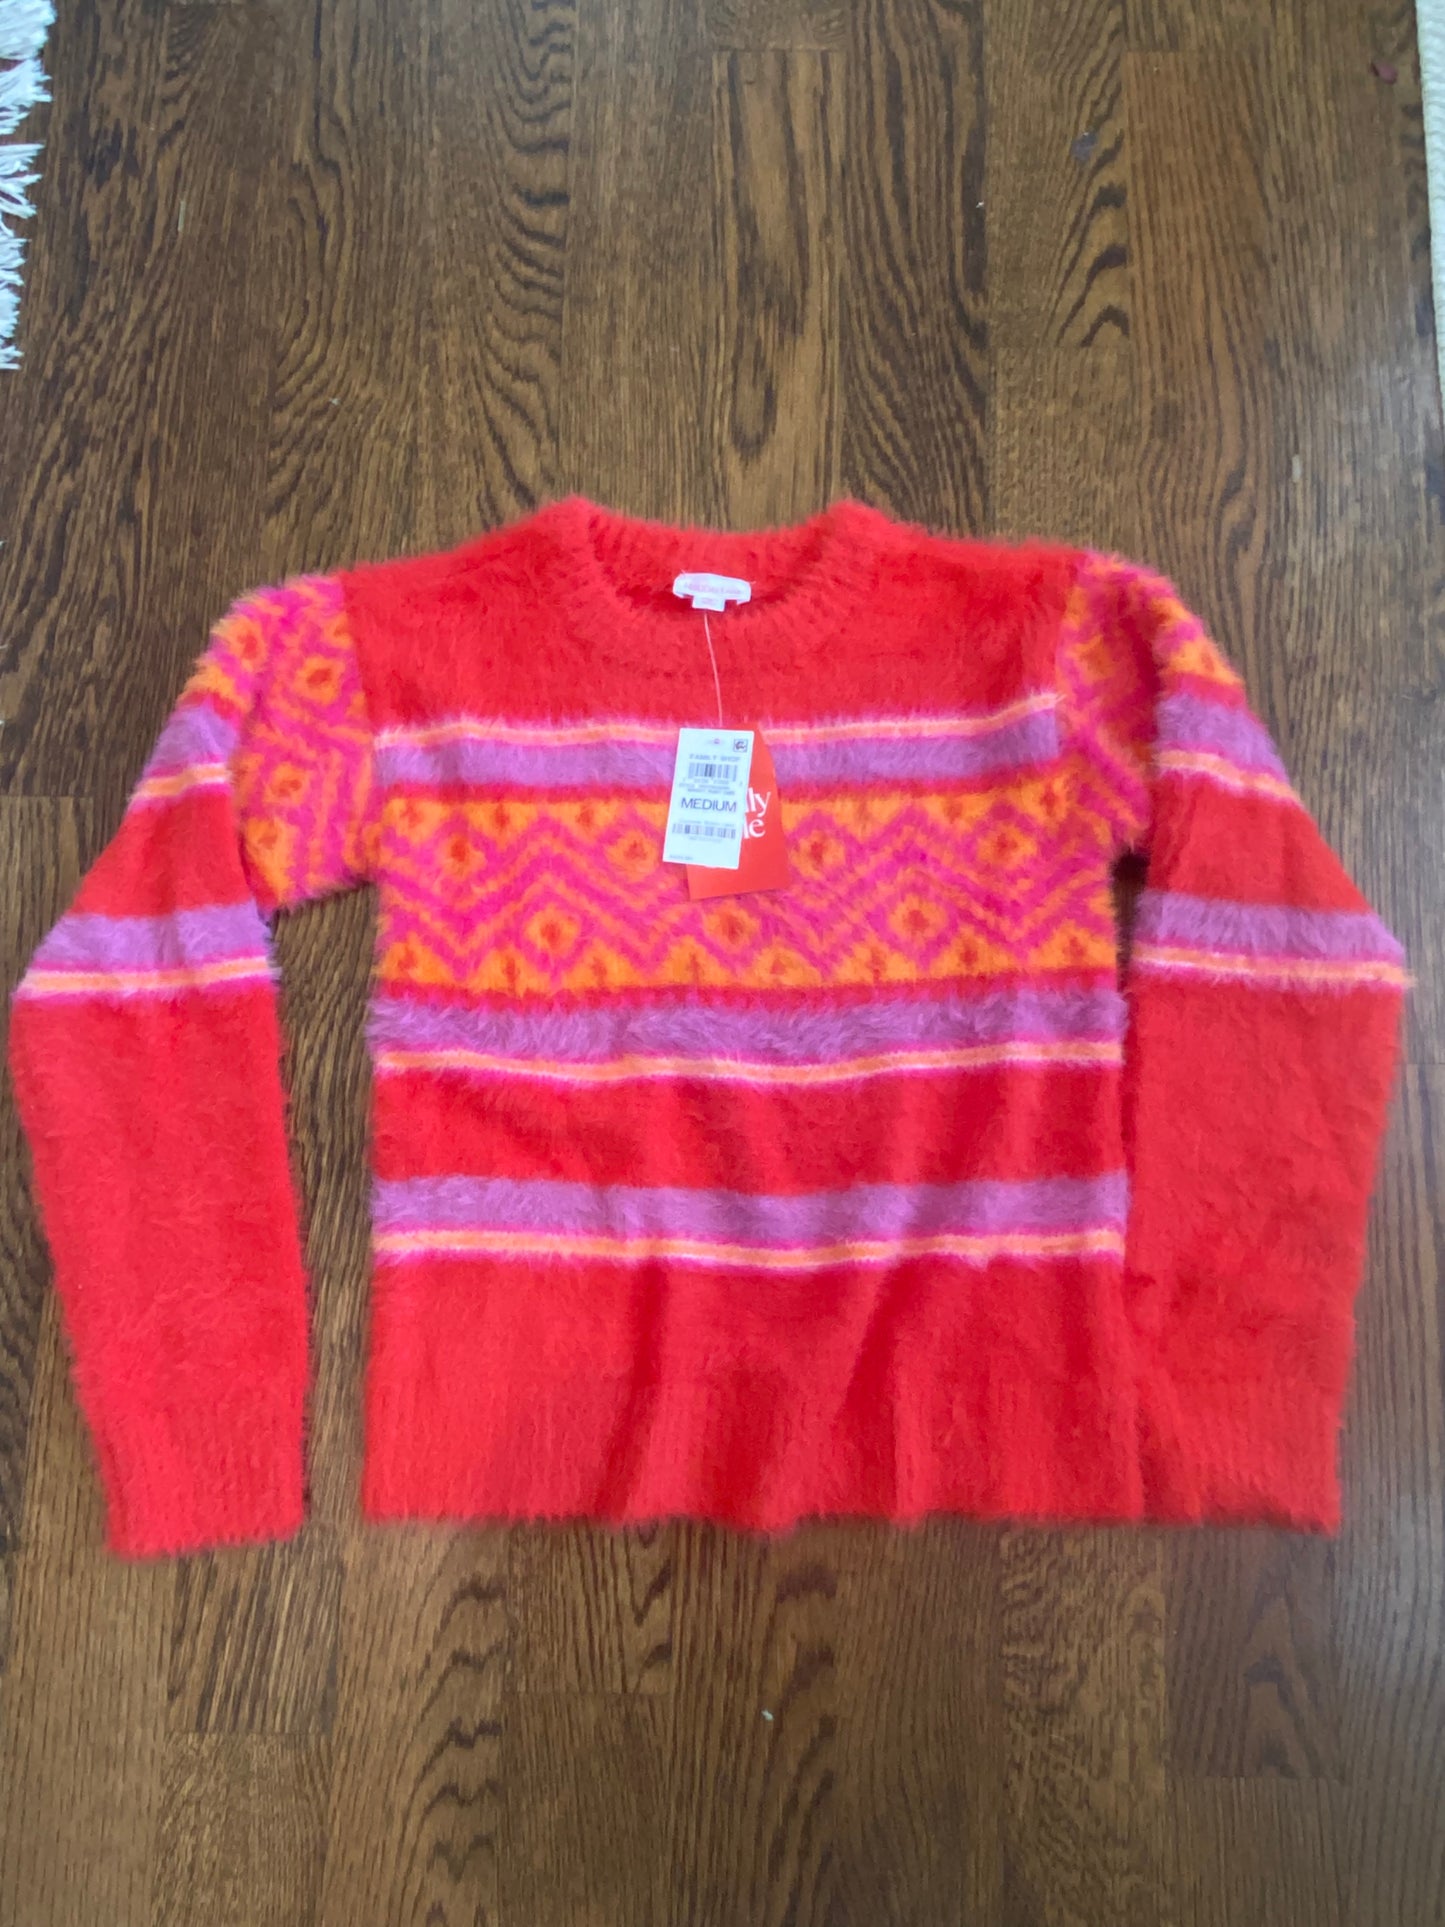 NWT Girls Sweater Size M